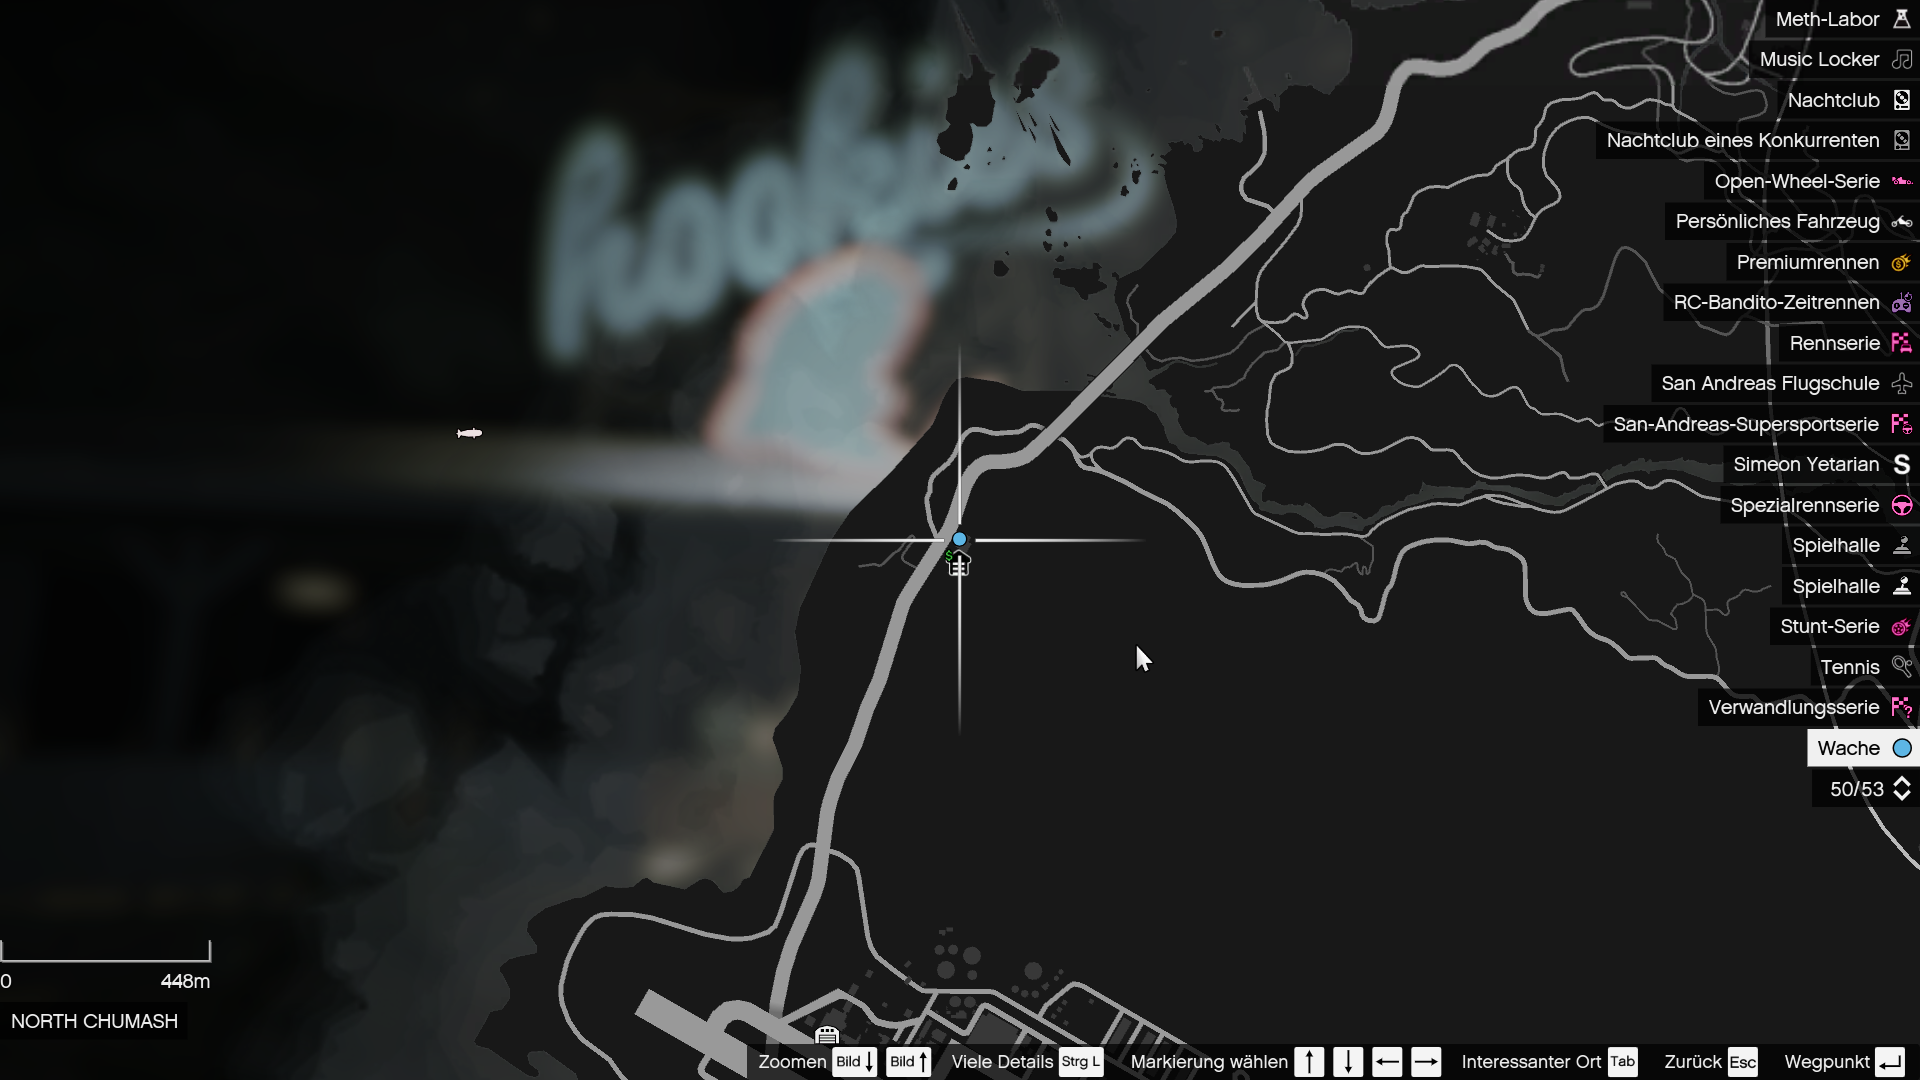 Grand Theft Auto V: Special Edition Map Contains Secret Messages